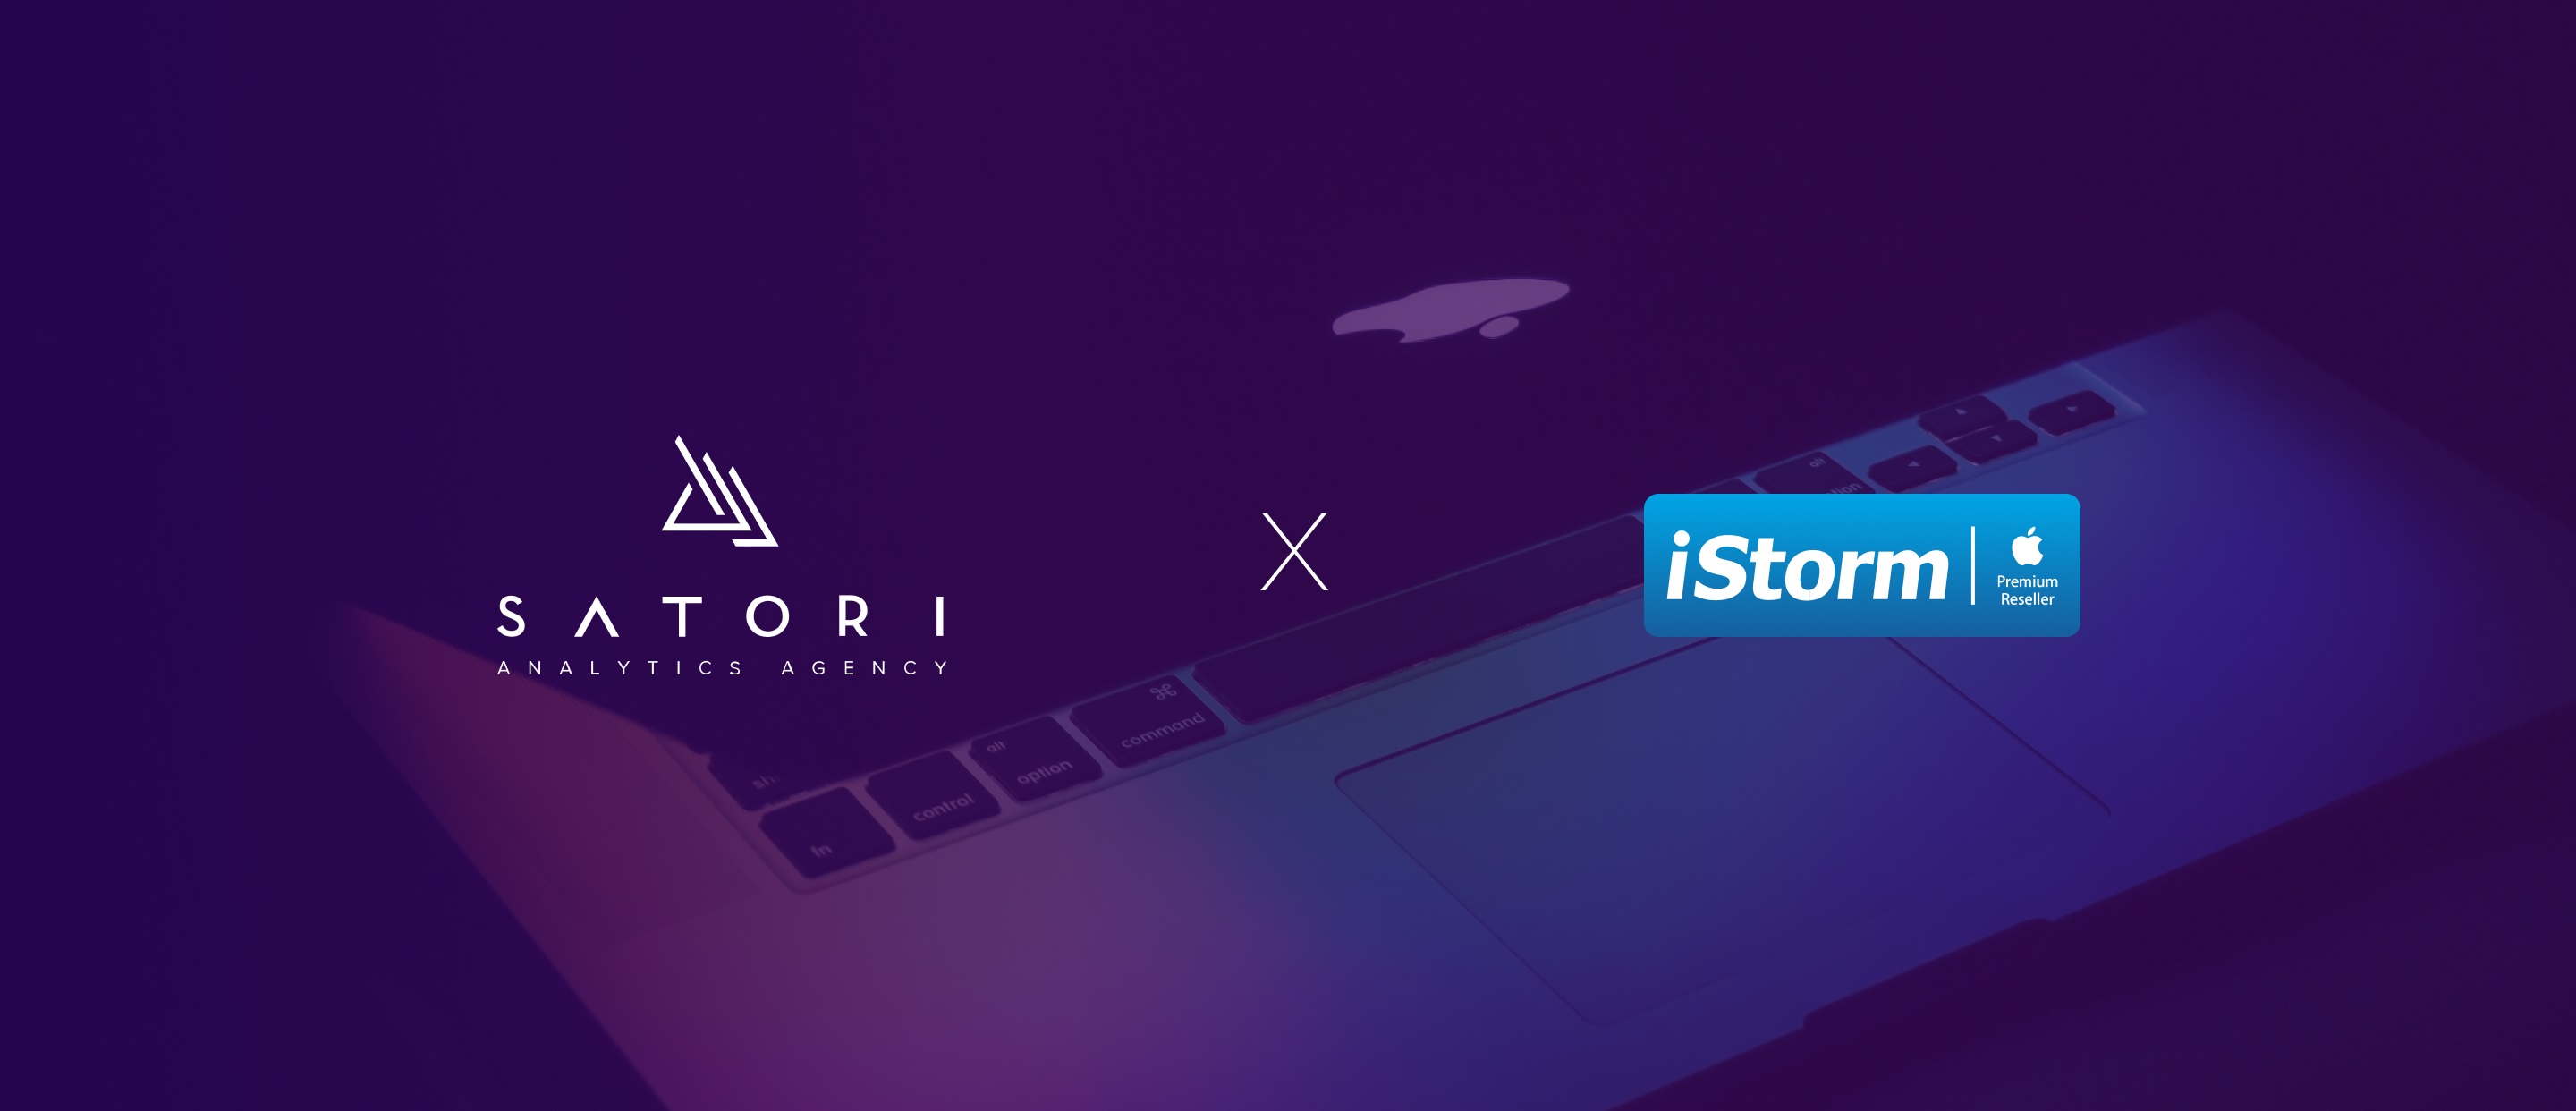 Partnership with iStorm